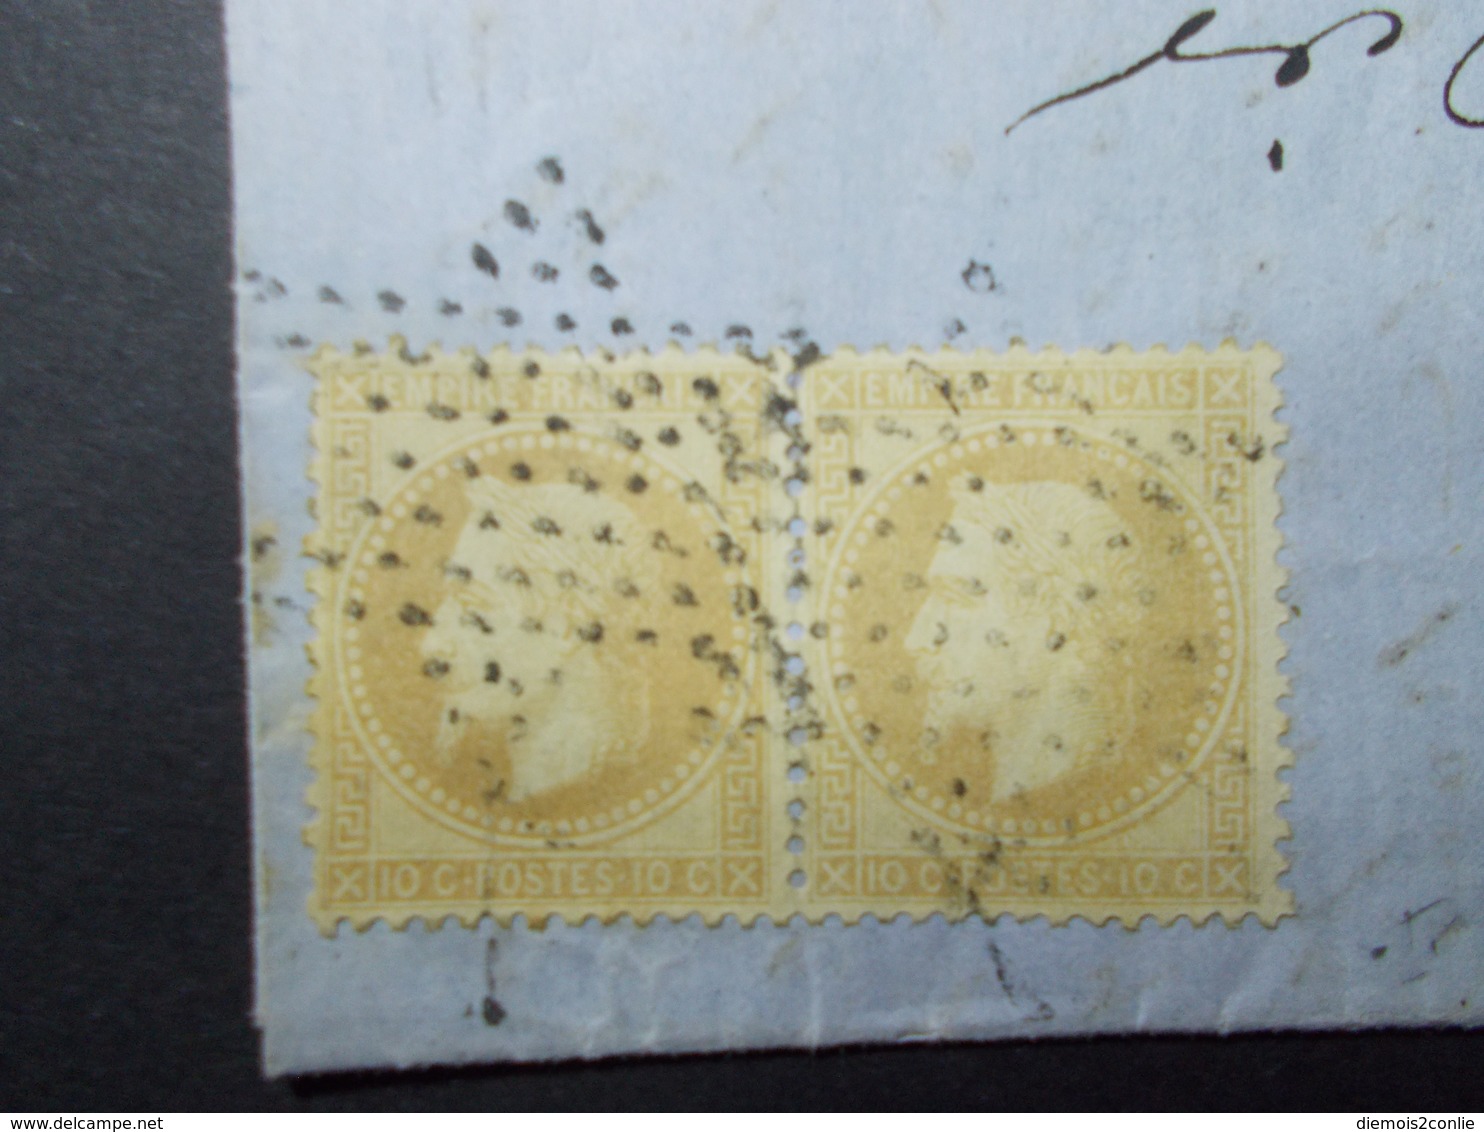 Marcophilie  Cachet Lettre Obliteration - Timbres Paire N°28 - Etoile Vide - 1869 (2261) - 1849-1876: Classic Period